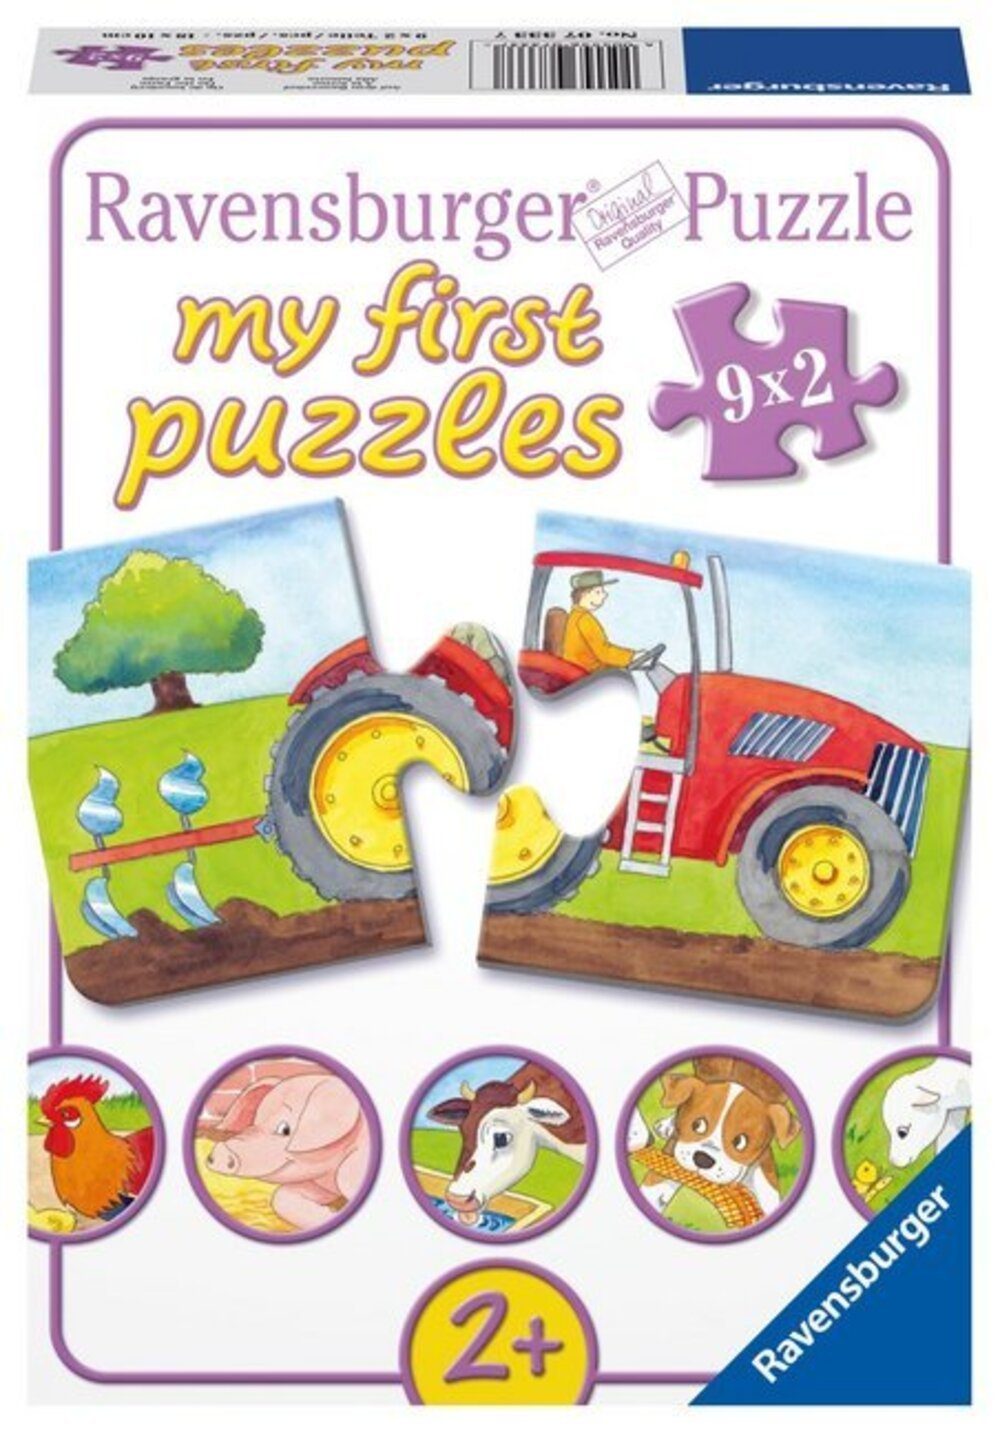 Ravensburger Puzzle Ravensburger Kinderpuzzle - Bauernhof Auf - dem Puzzleteile 07333 first..., my 19